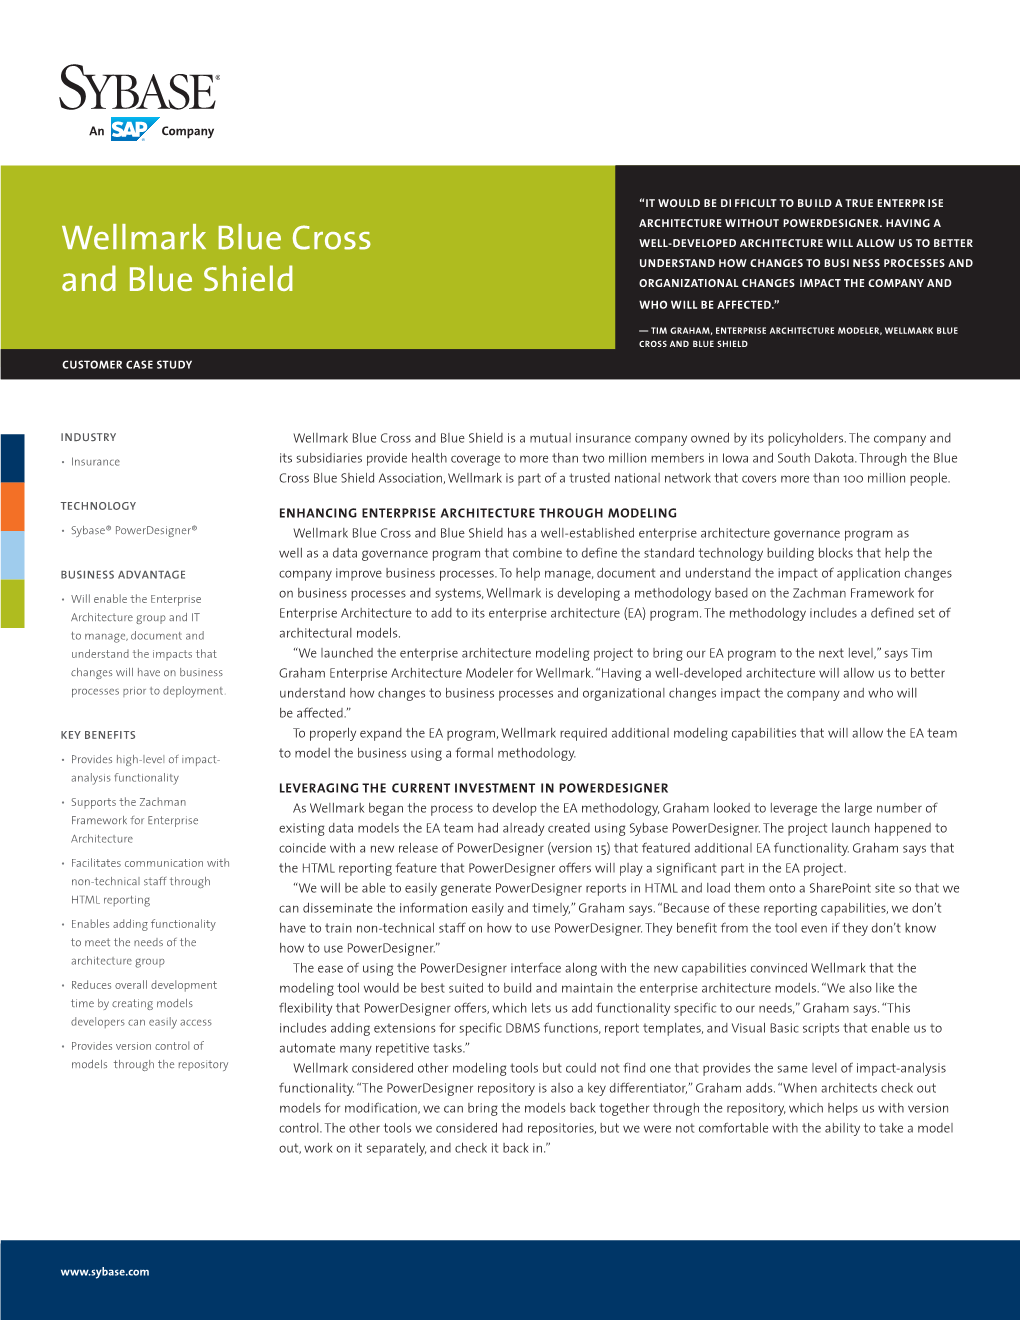 Wellmark Blue Cross and Blue Shield Cutomer Case Study